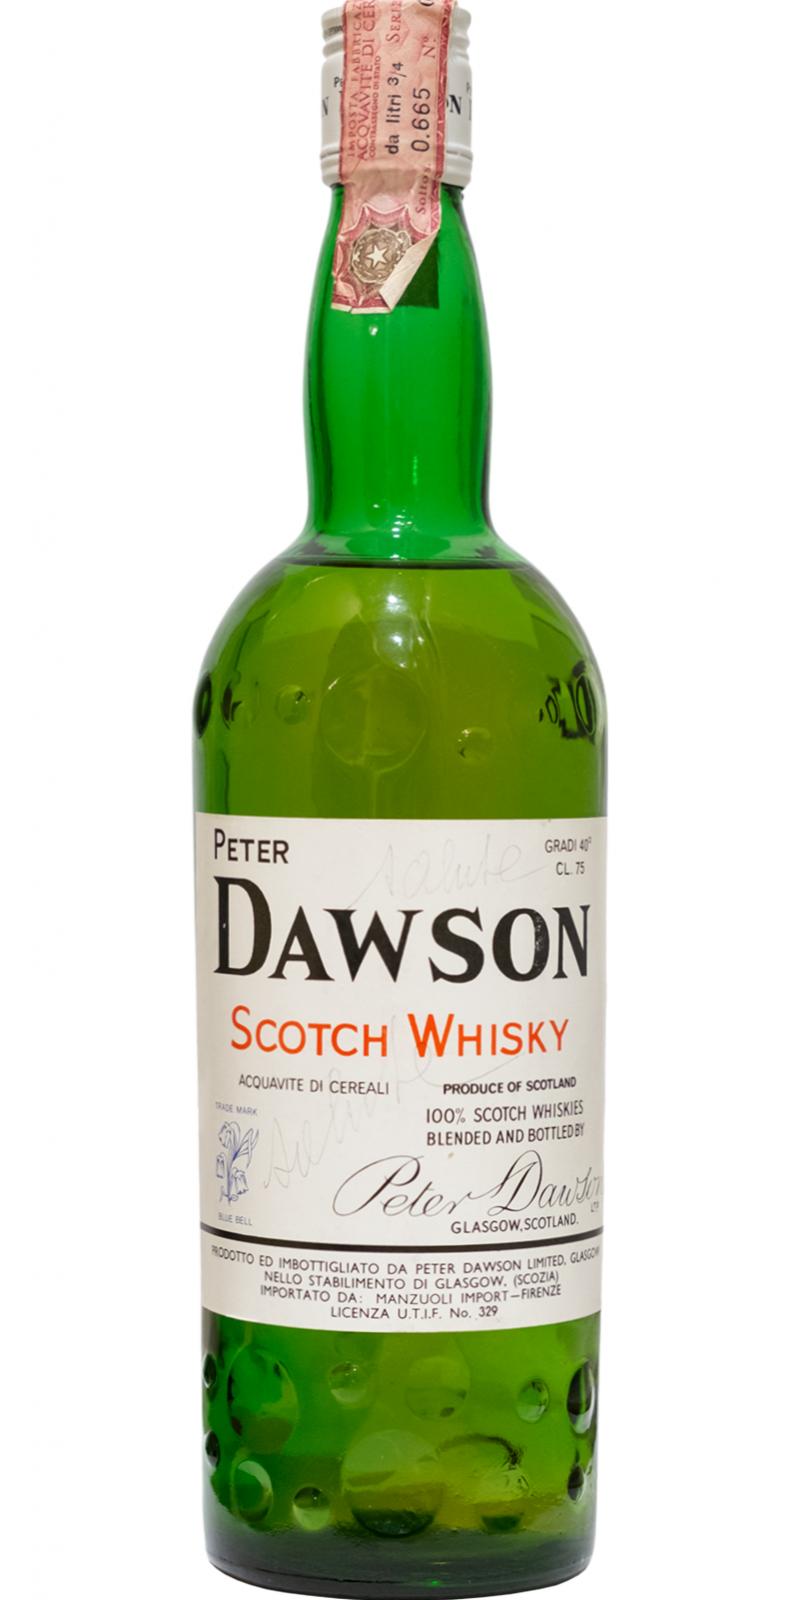 Peter Dawson Scotch Whisky Manzuoli Import Firenze 40% 750ml